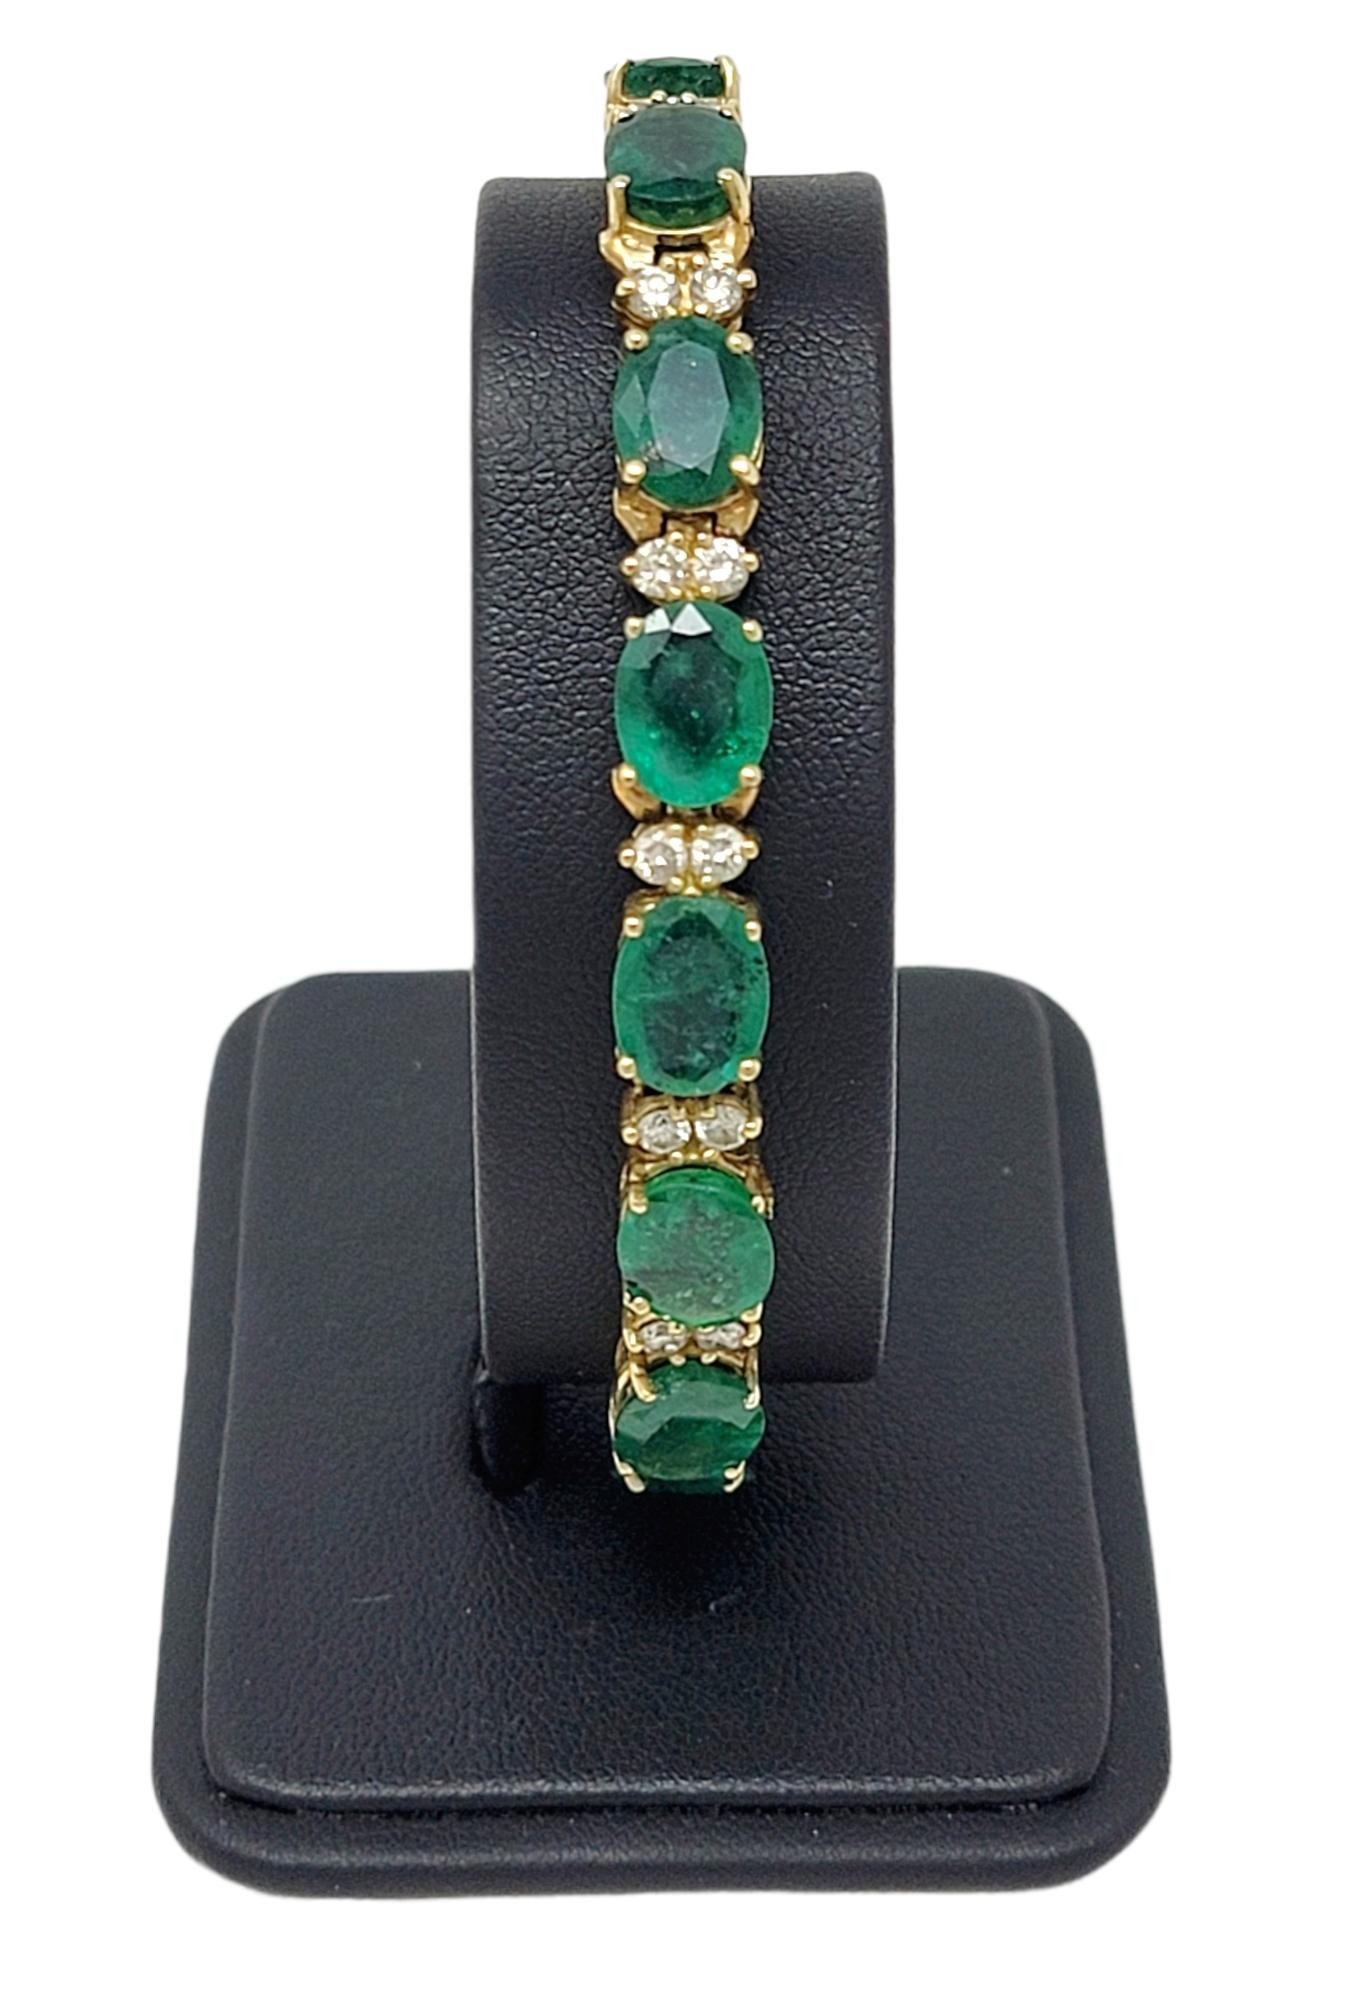 19.40 Carats Oval Mixed Cut Emerald and Diamond Line Bracelet in 14 Karat Gold 9